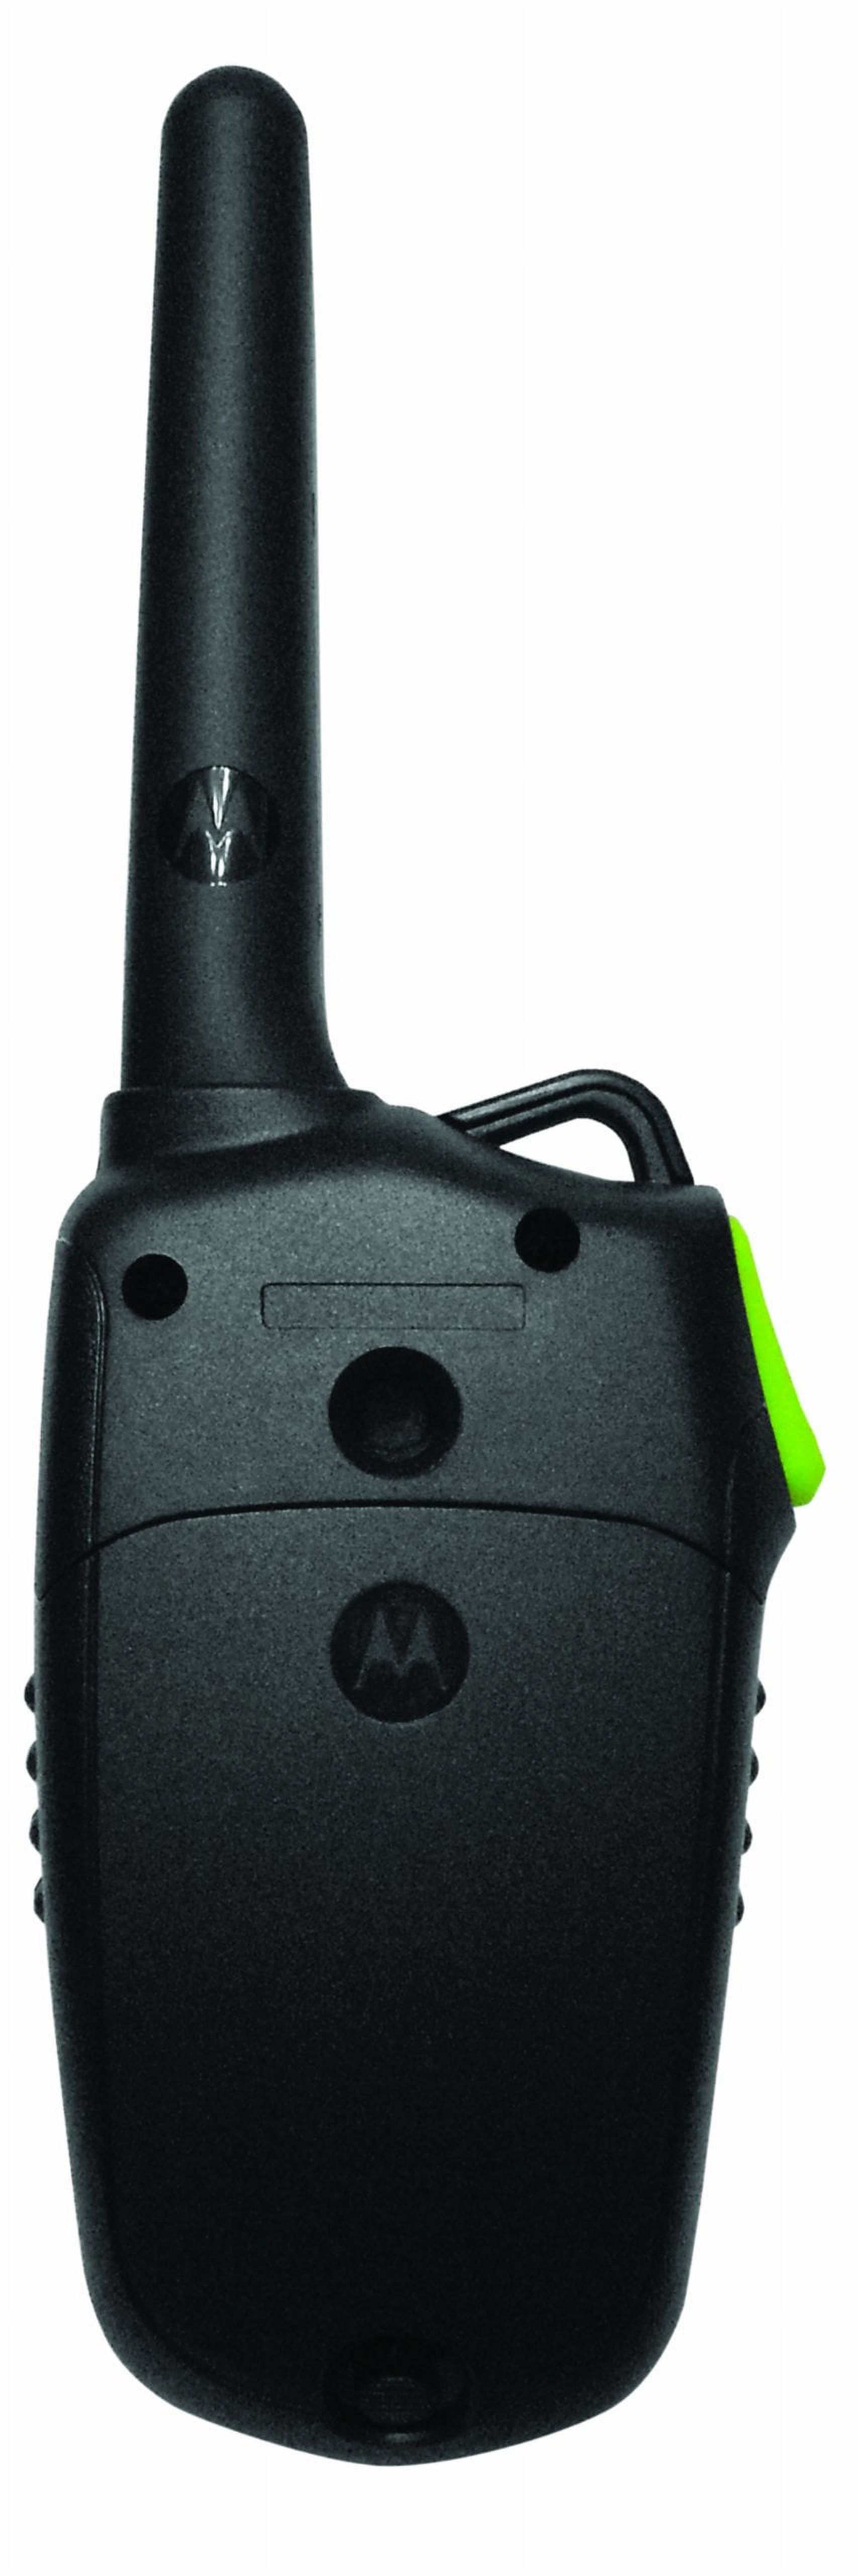 Motorola CCHUSB Mini USB Car Charger (Black) - image 4 of 8